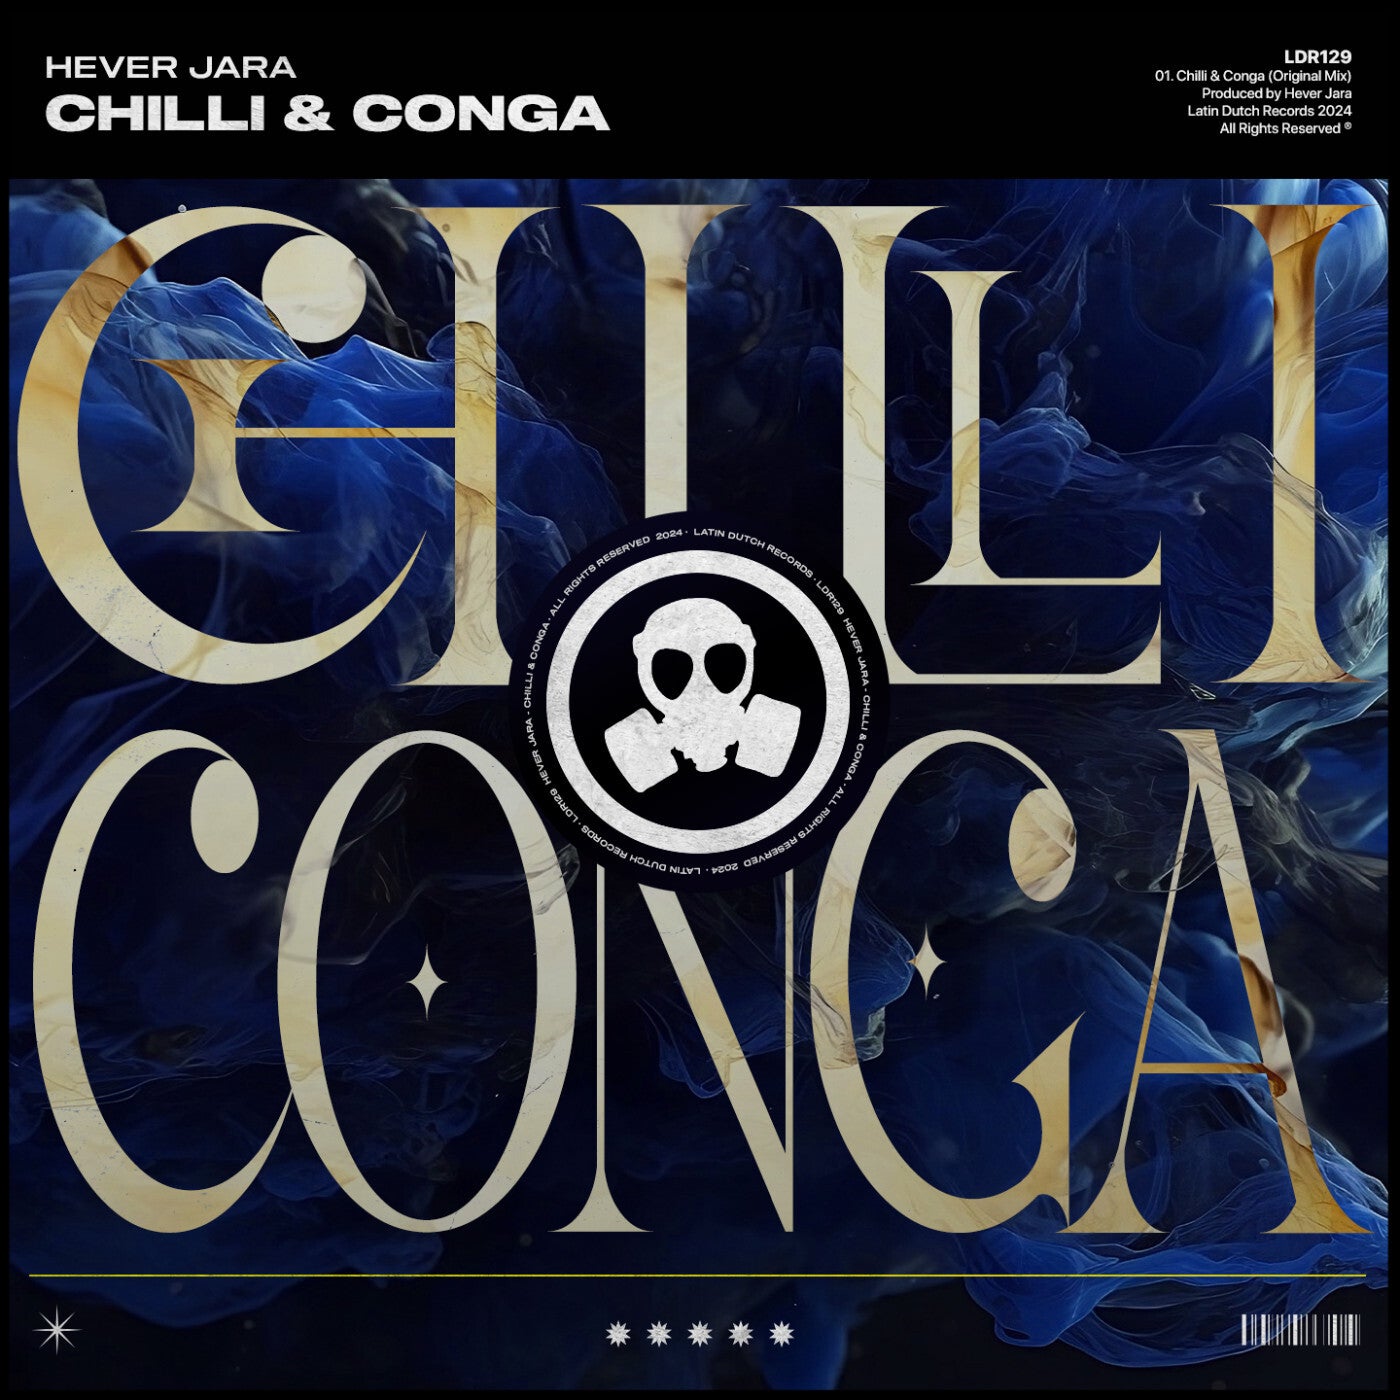 image cover: Hever Jara - Chilli & Conga (Original Mix) on Latin Dutch Records